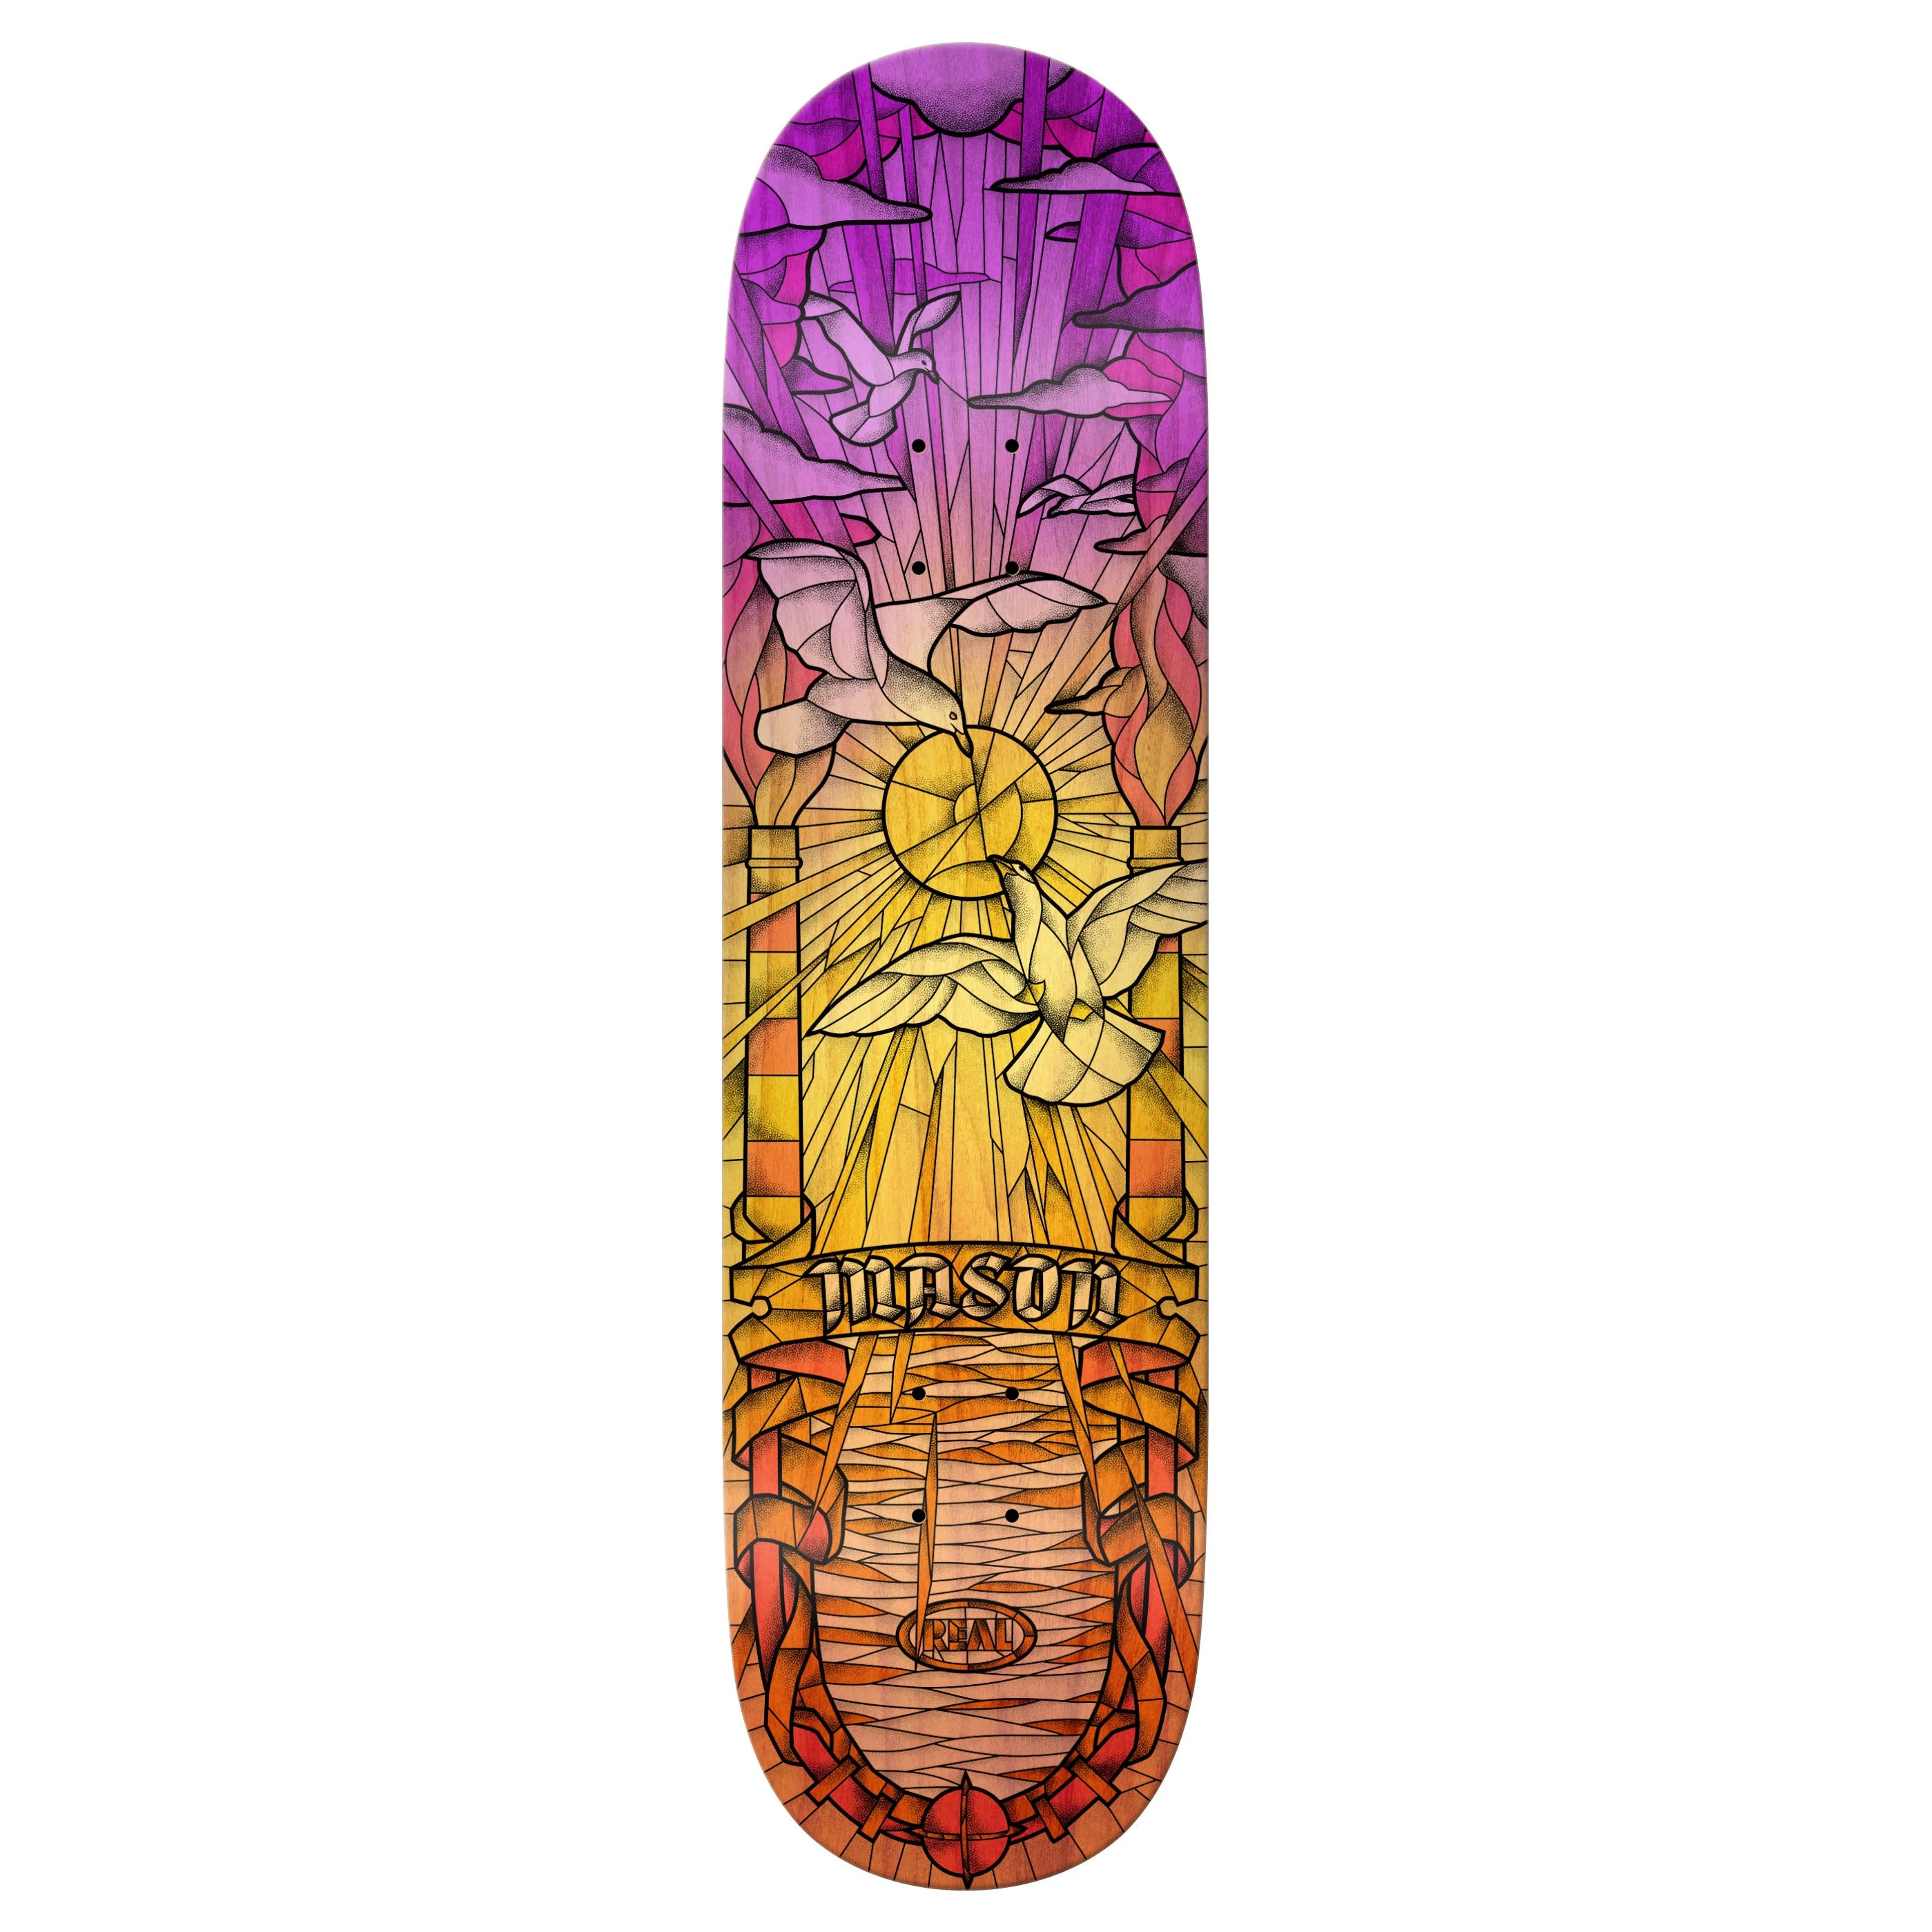 Mason Silva Chromatic Cathedral Real Skateboard deck